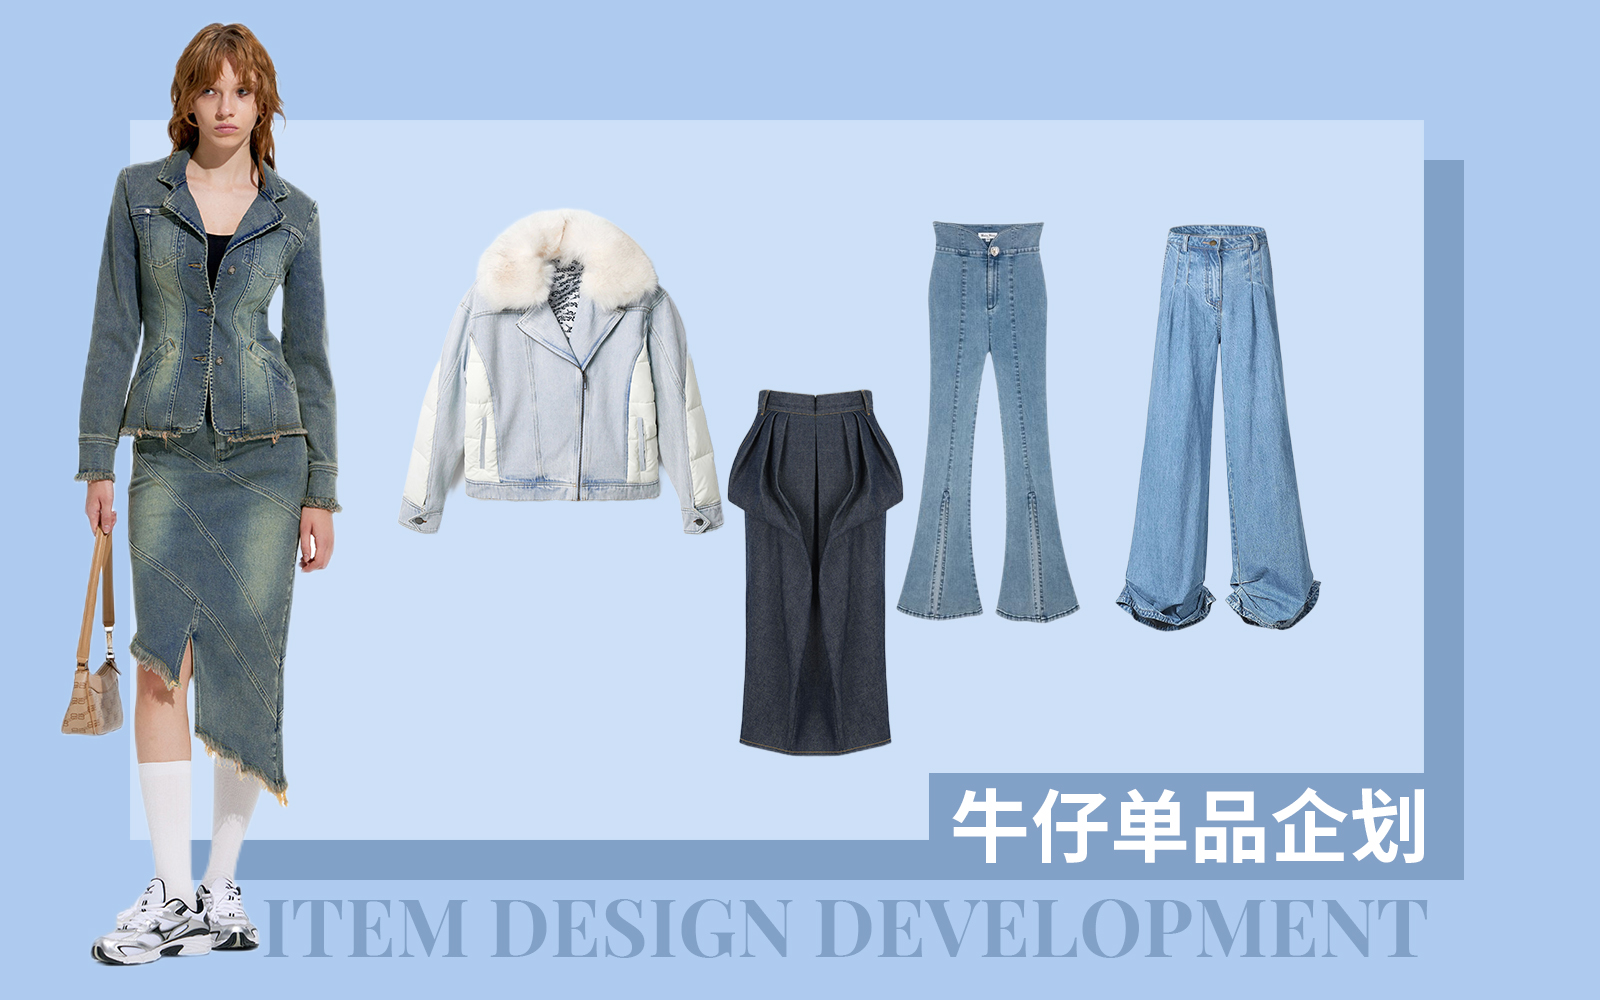 Y2K Fashion -- The Item Design Development for Women's Denim